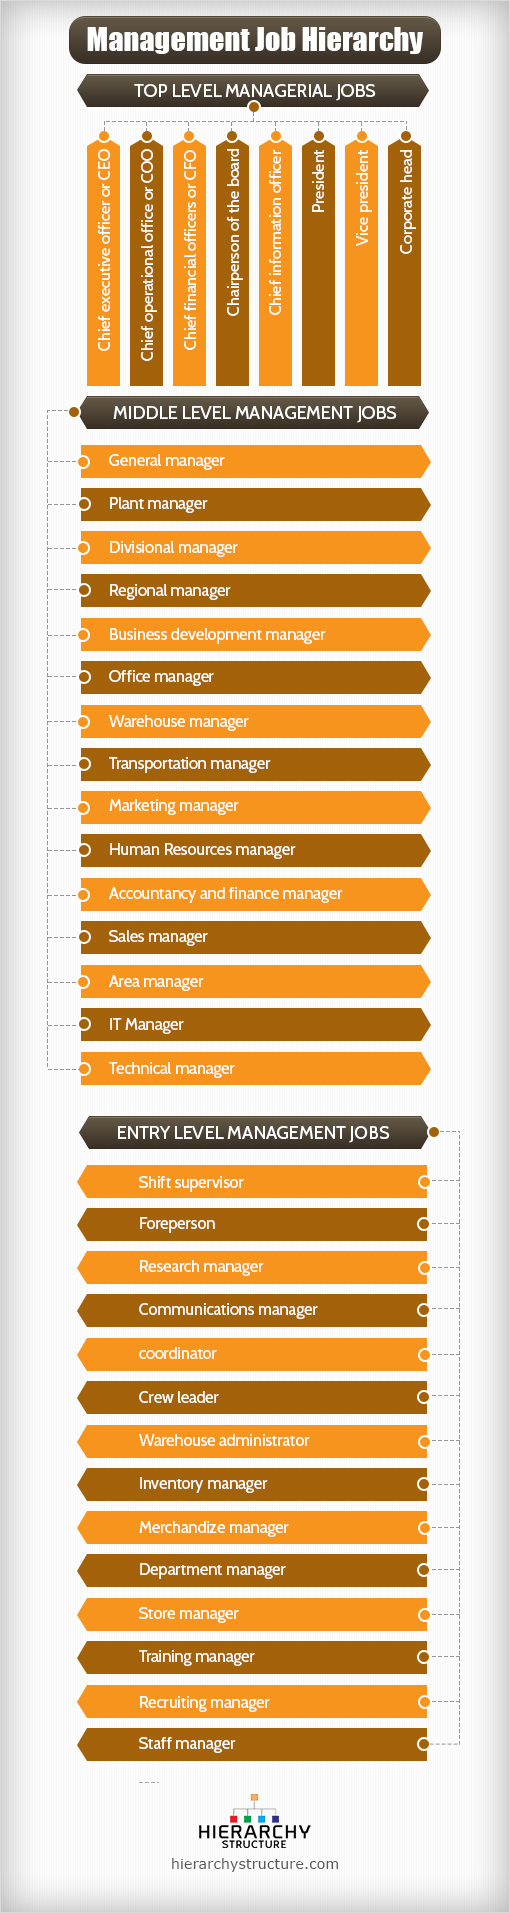 Management Job Hierarchy